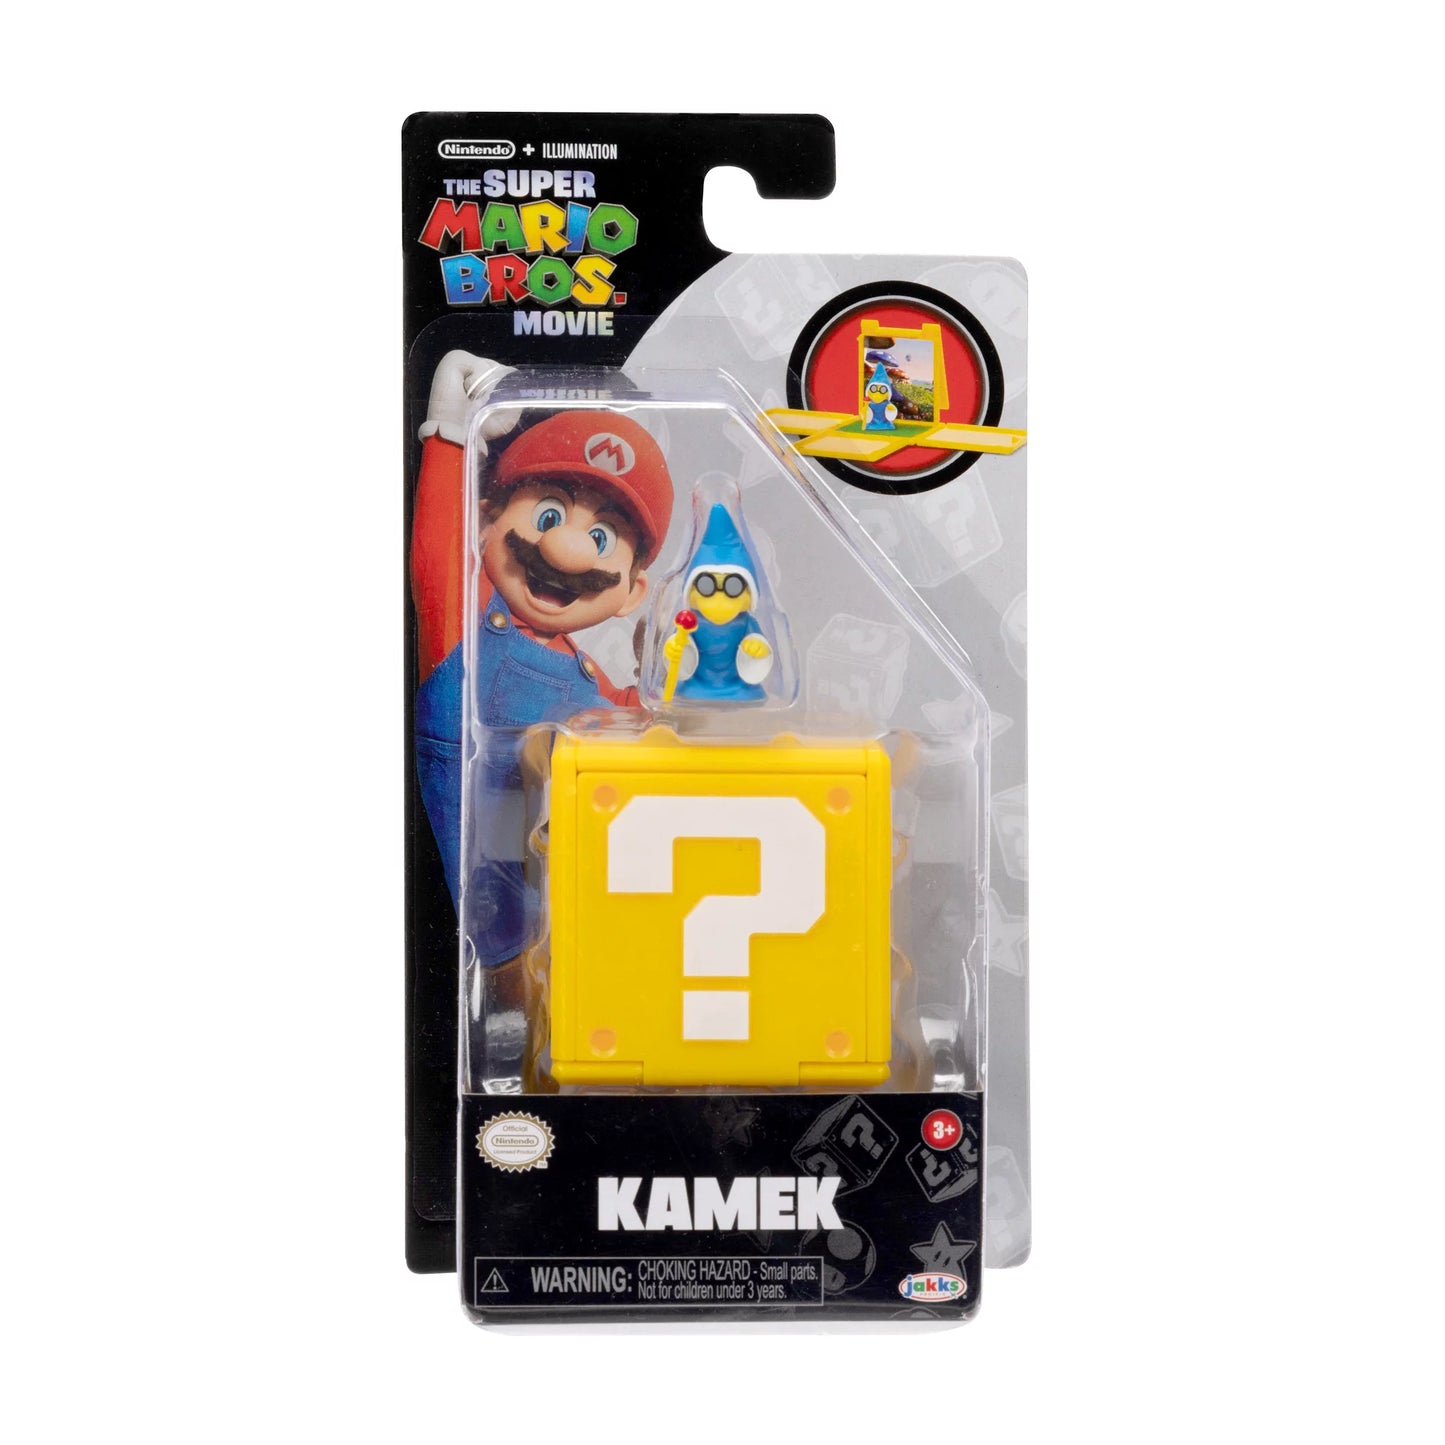 The Super Mario Bros. Movie Mini-Figures- KAMEK